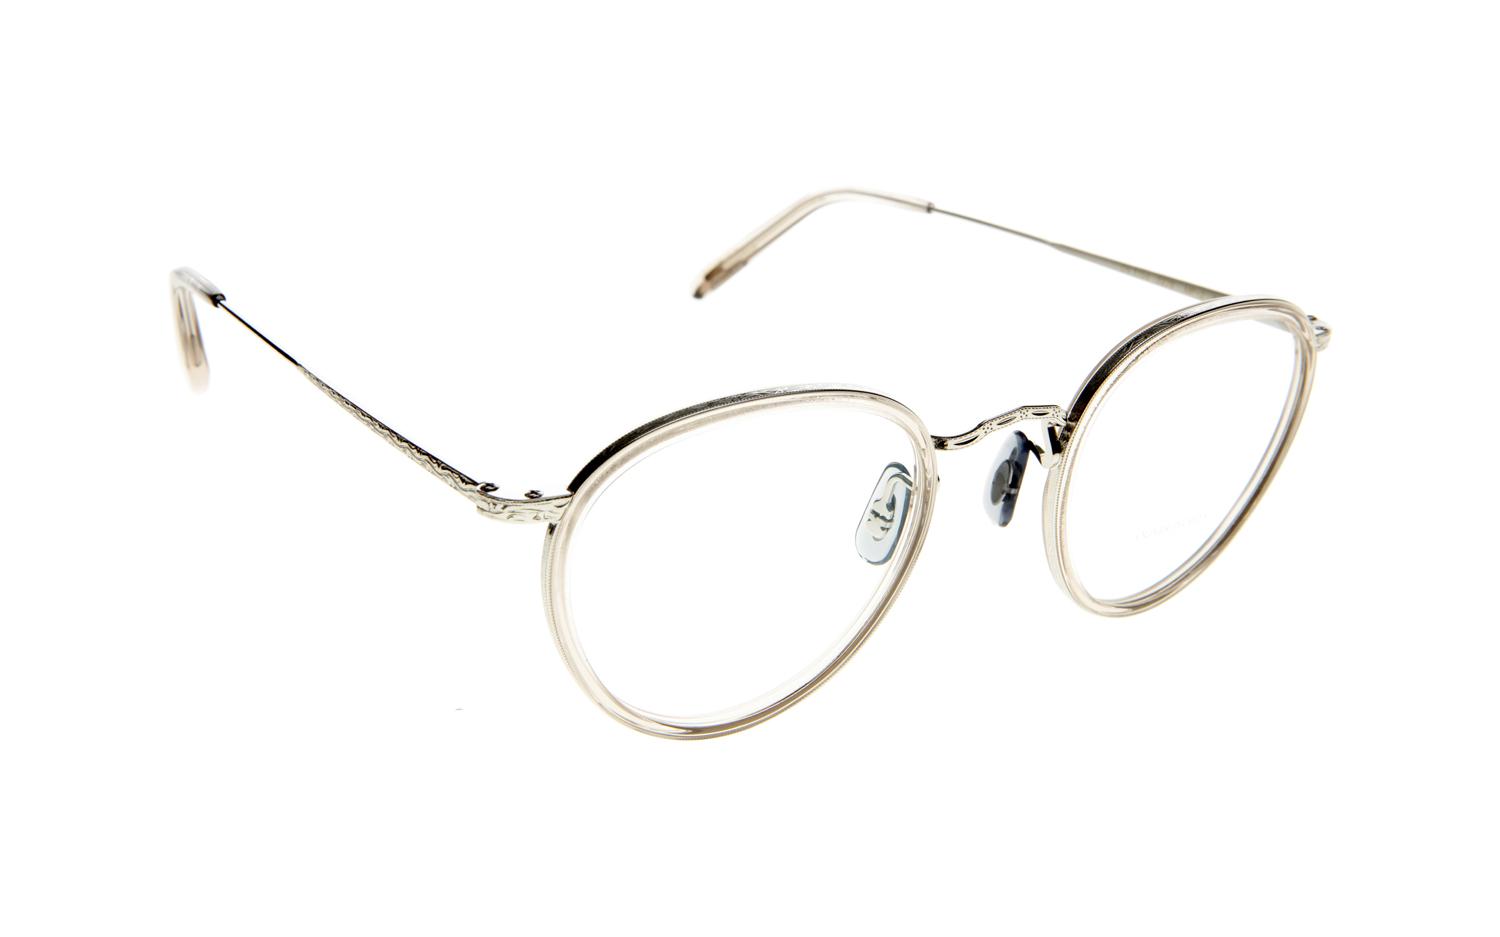 Oliver Peoples Limited Edition Mp 2 Ov1104 5276 48 Prescription Glasses Shade Station